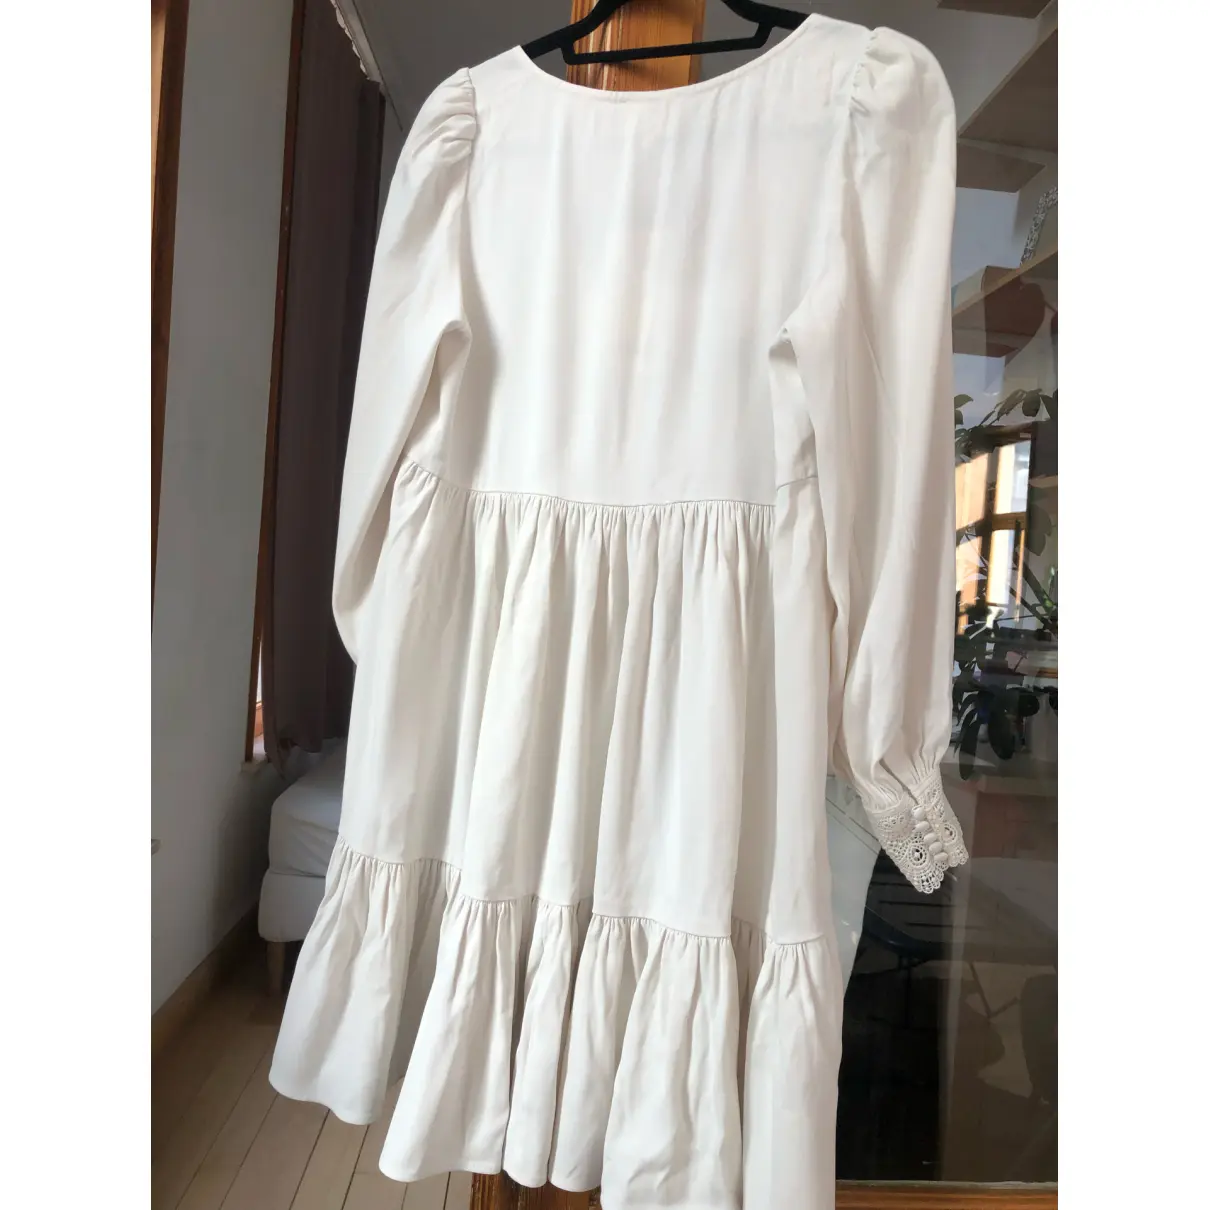 Buy Sézane Mini dress online